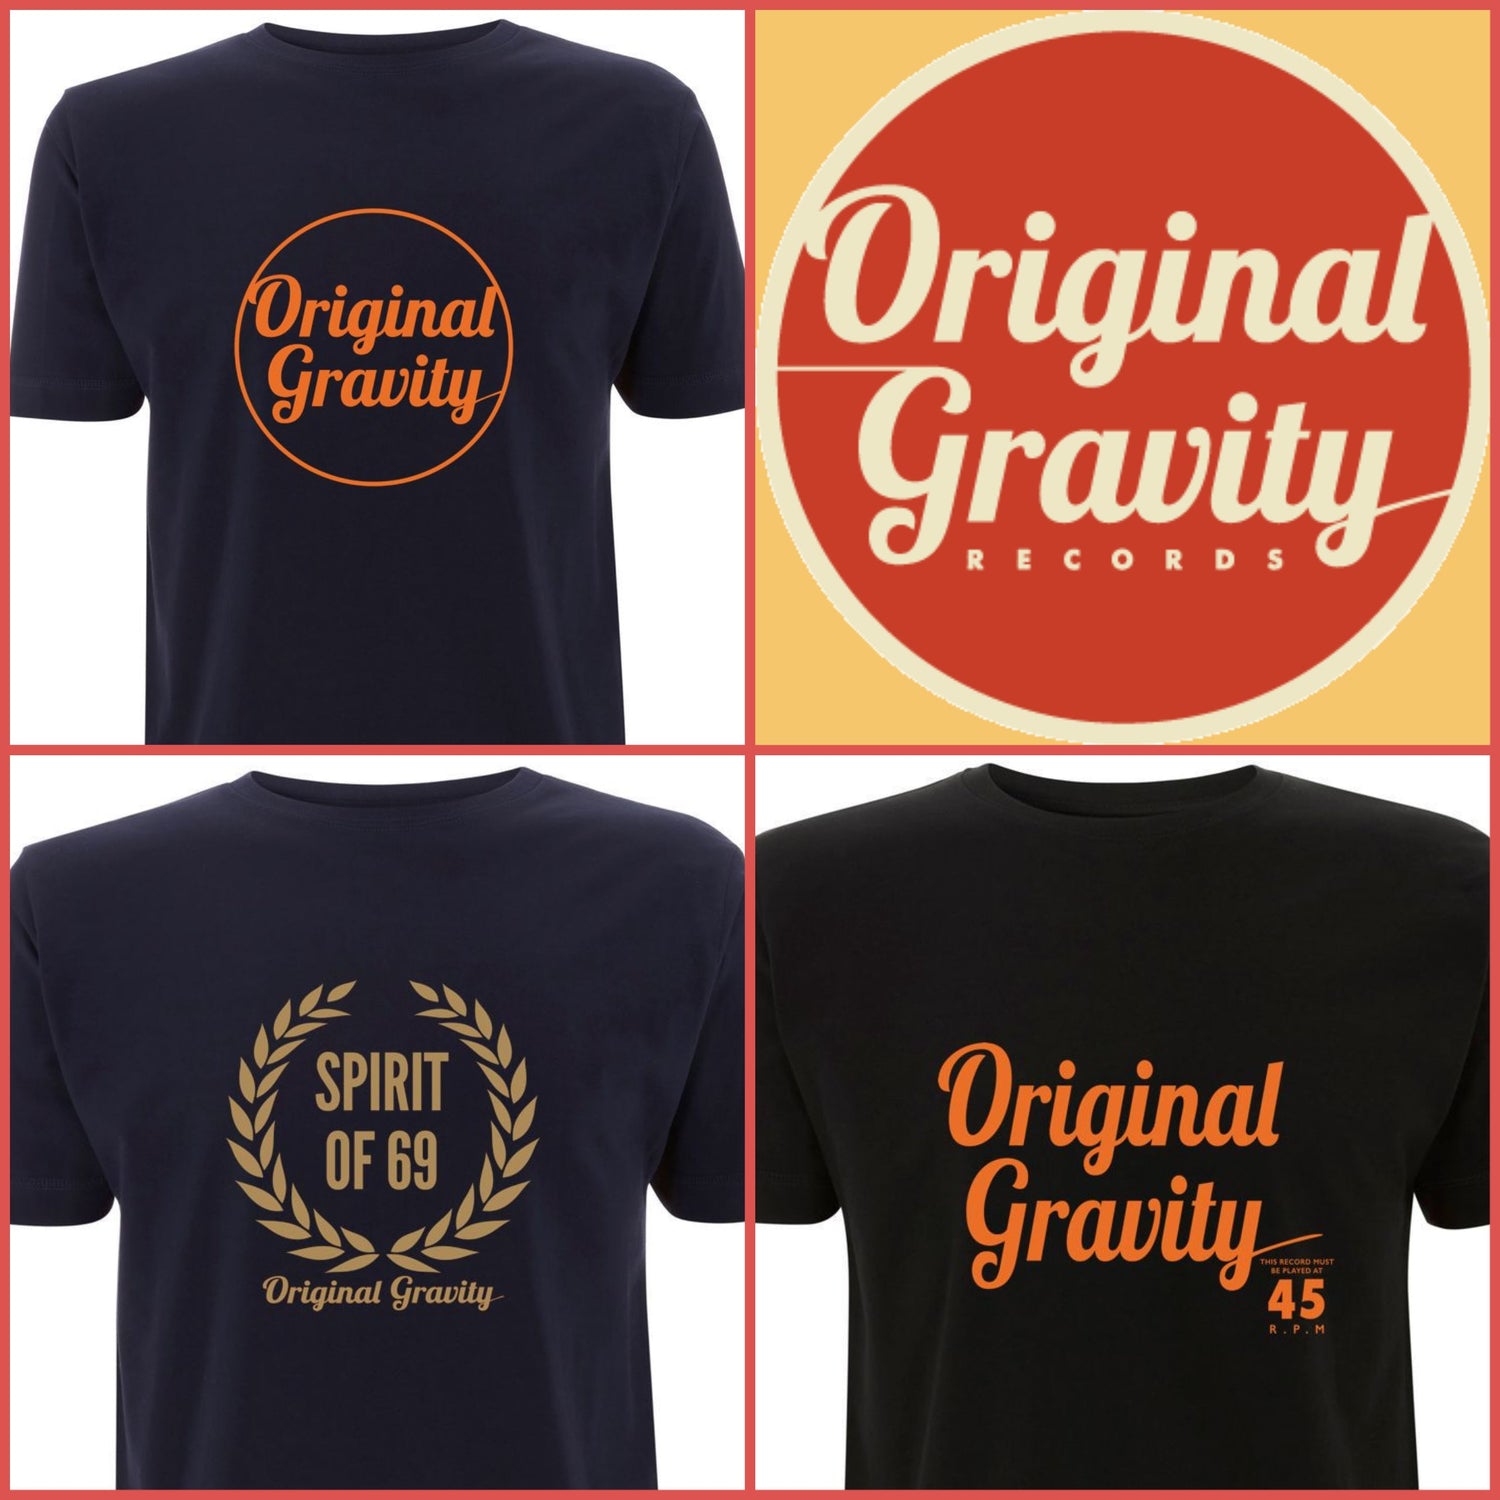 Official Merchandise: Original Gravity Records